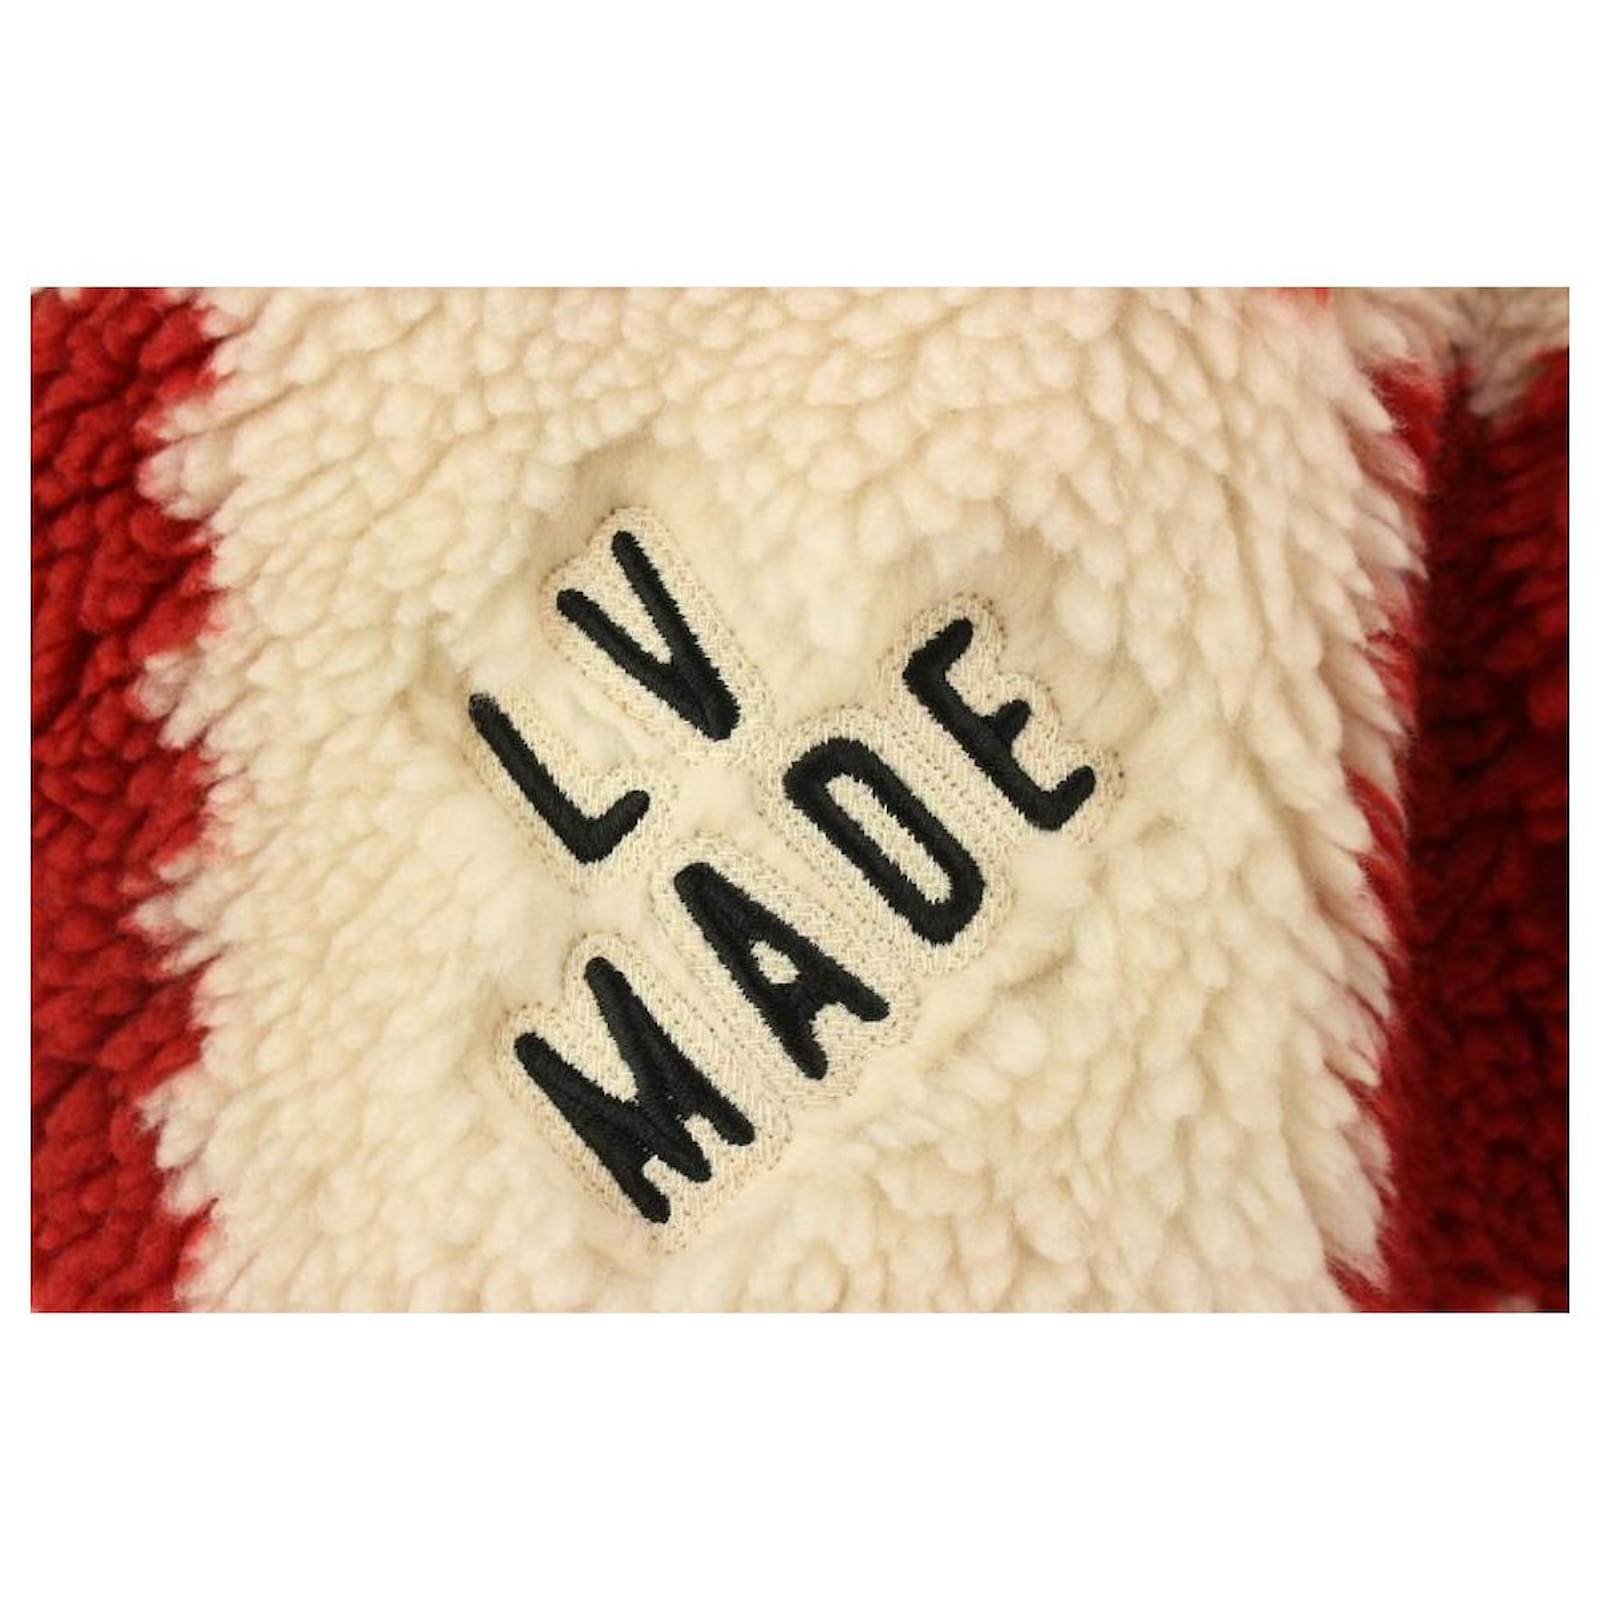 Louis Vuitton Mens M LV Nigo Navy Jacquared Damier Fleece Zip